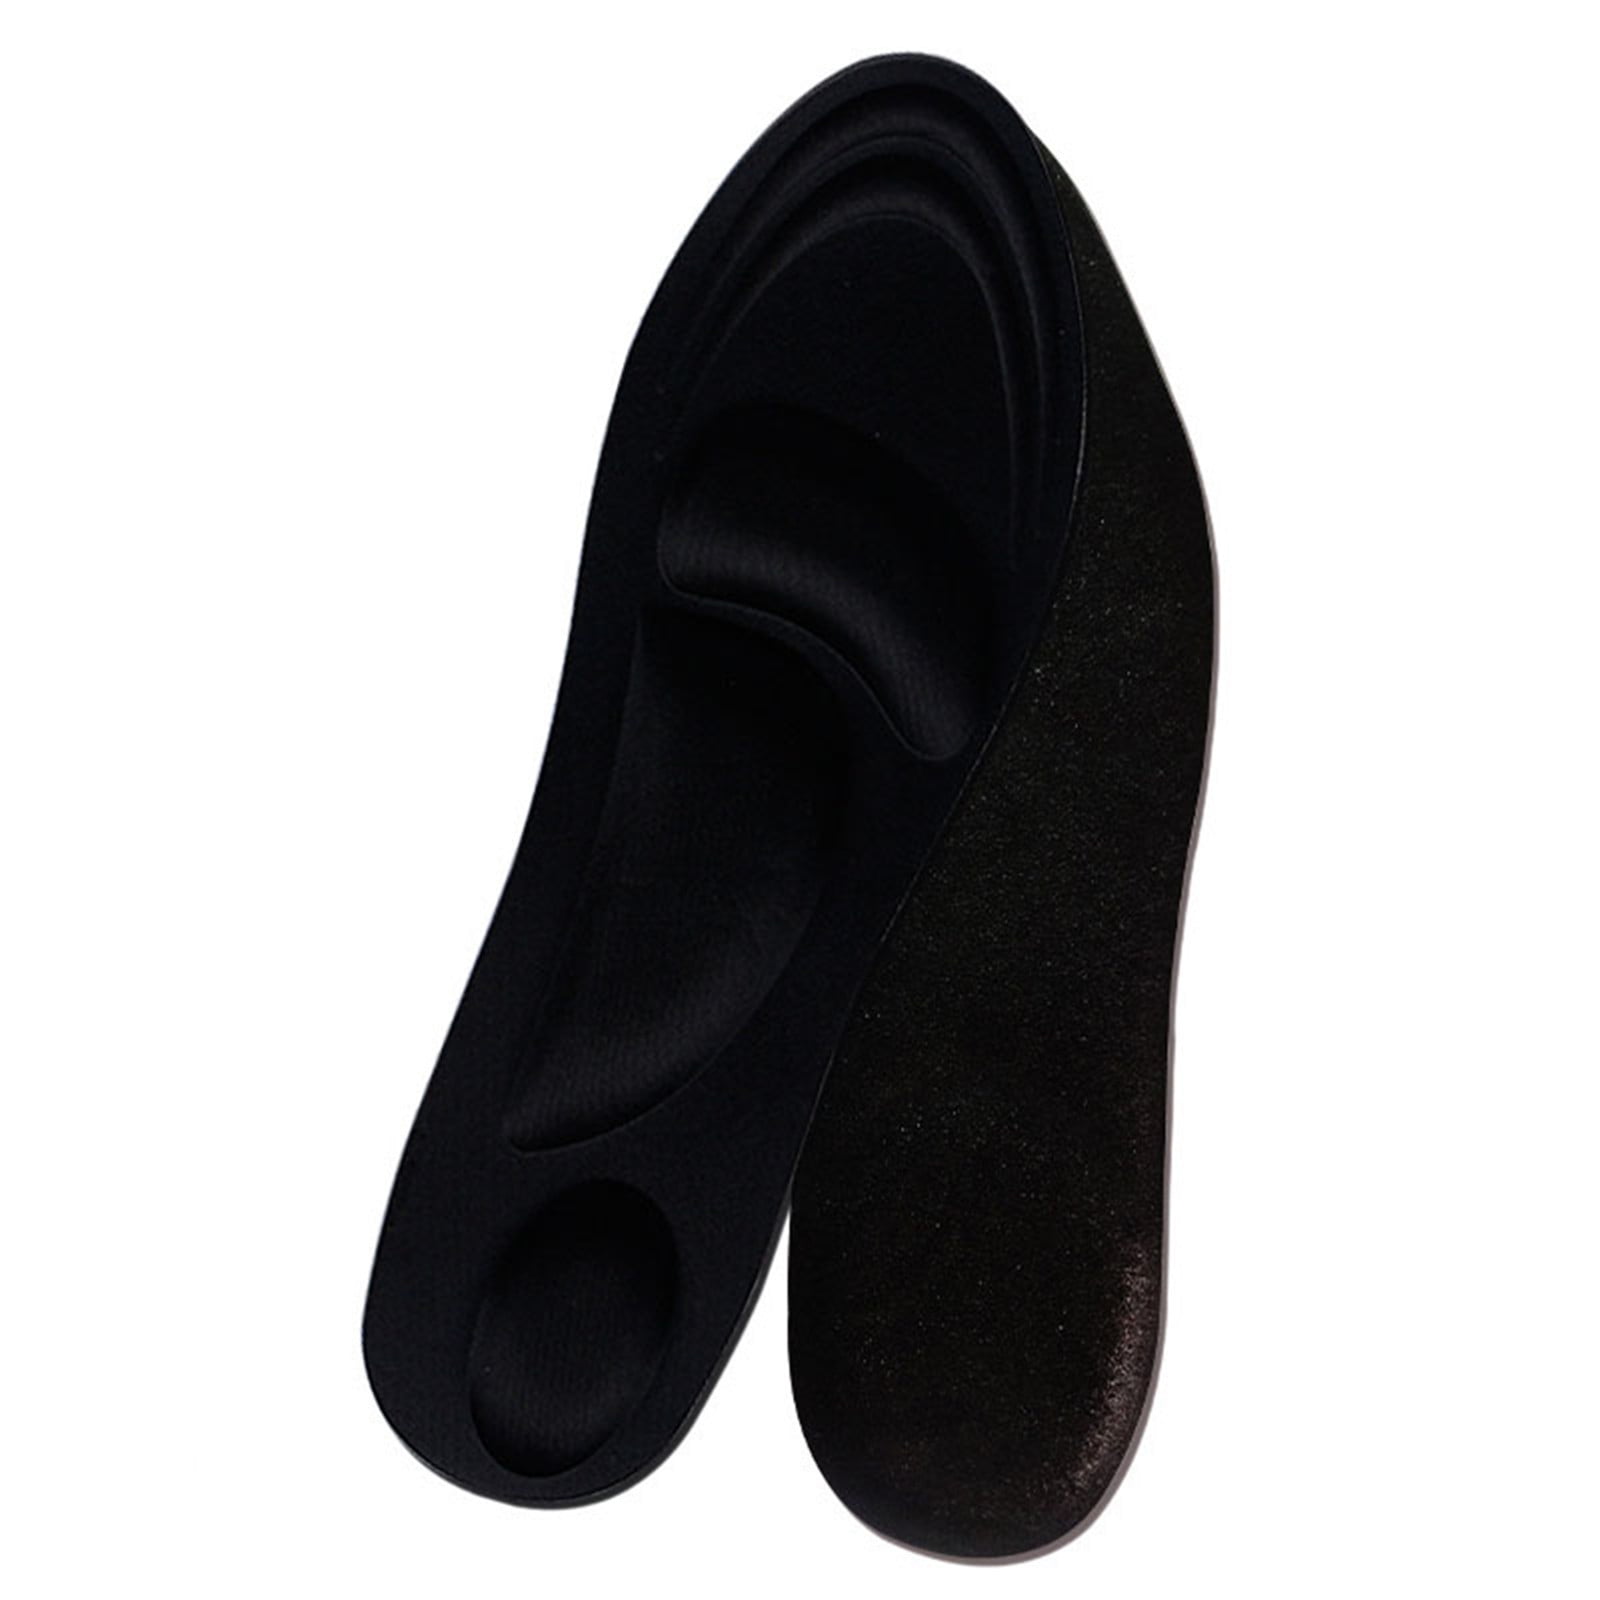 4D High Heel Shoe Pad Sport Sponge Soft Insole Pain Relief Insert Cushion Pad Rf 